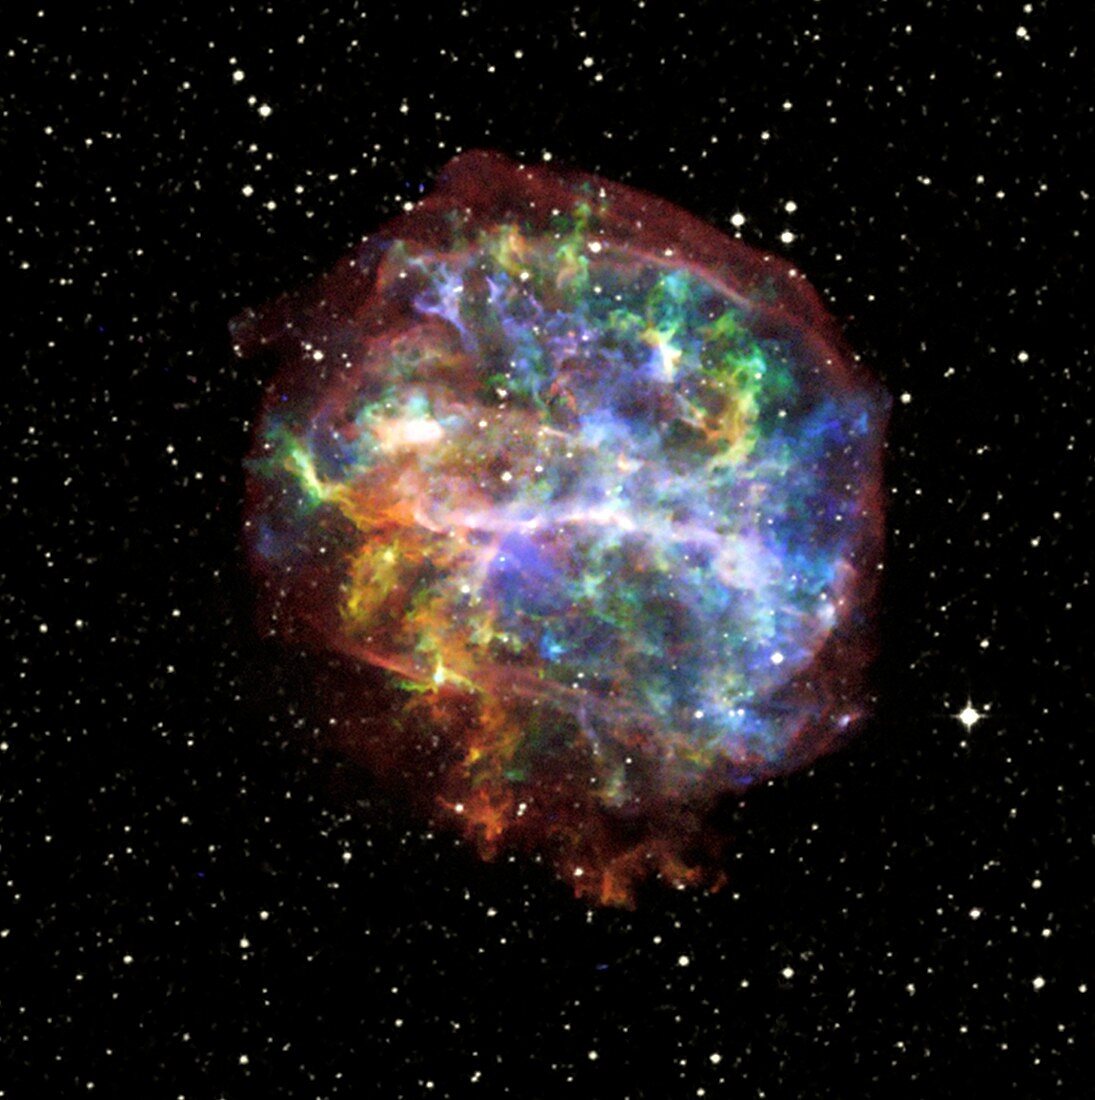 Supernova remnant G292.0+1.8,X-ray image